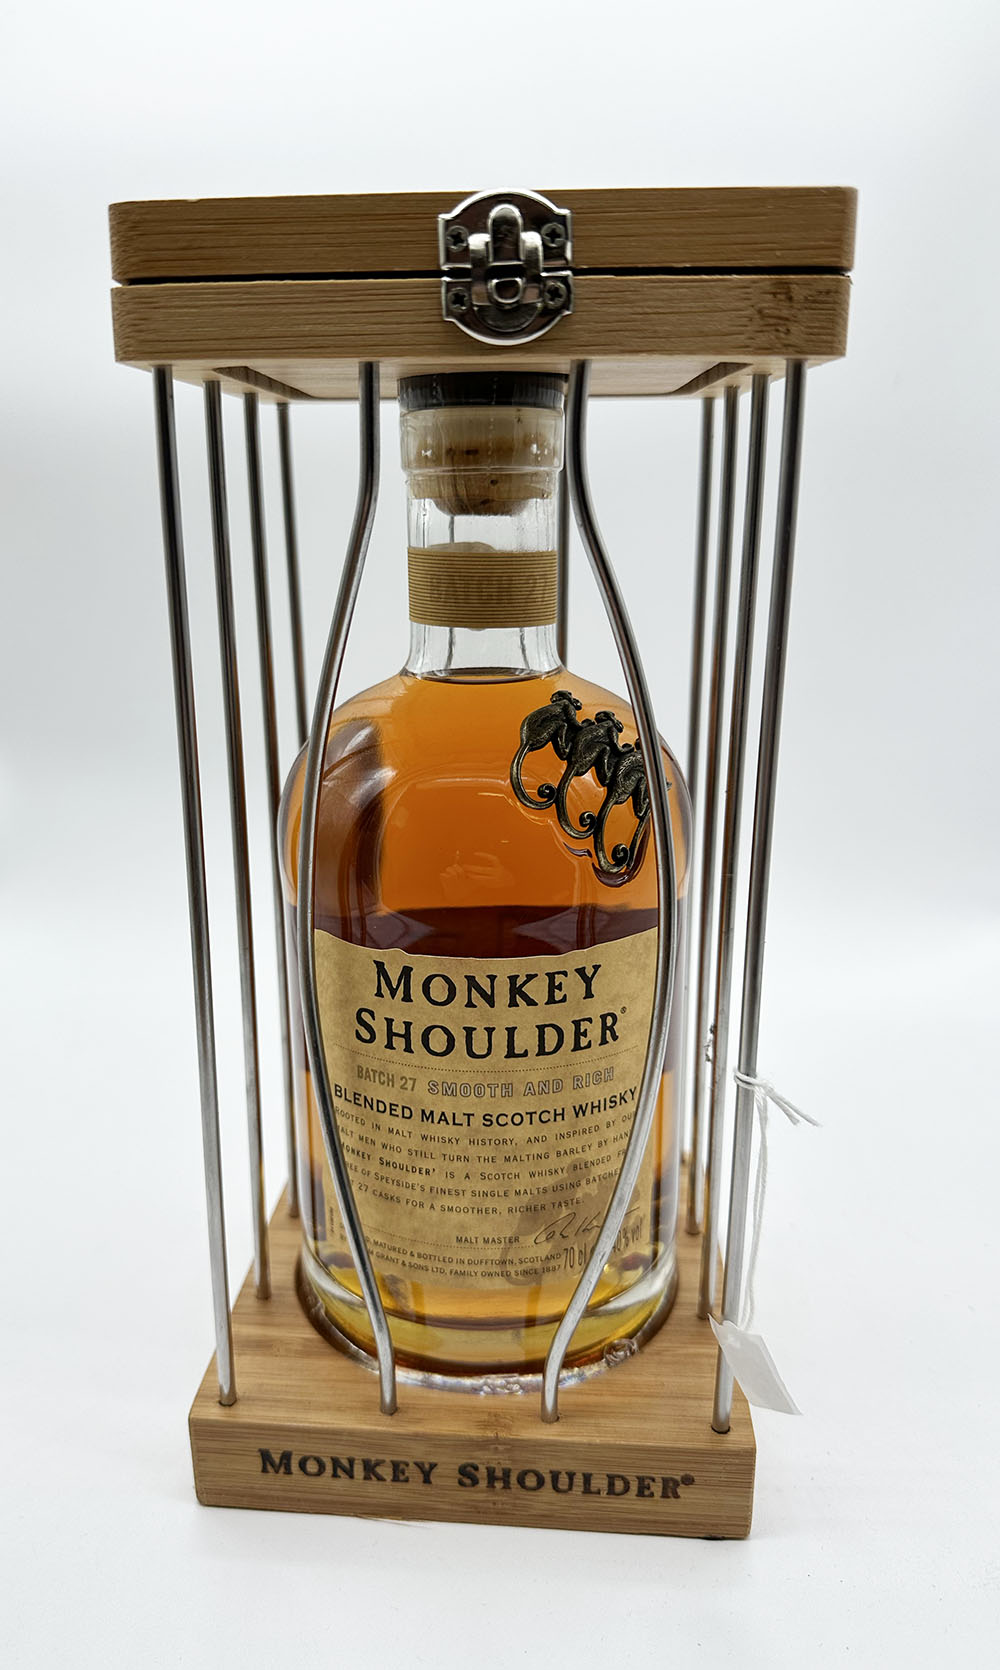 A bottle of Monkey Shoulder whisky in a cage